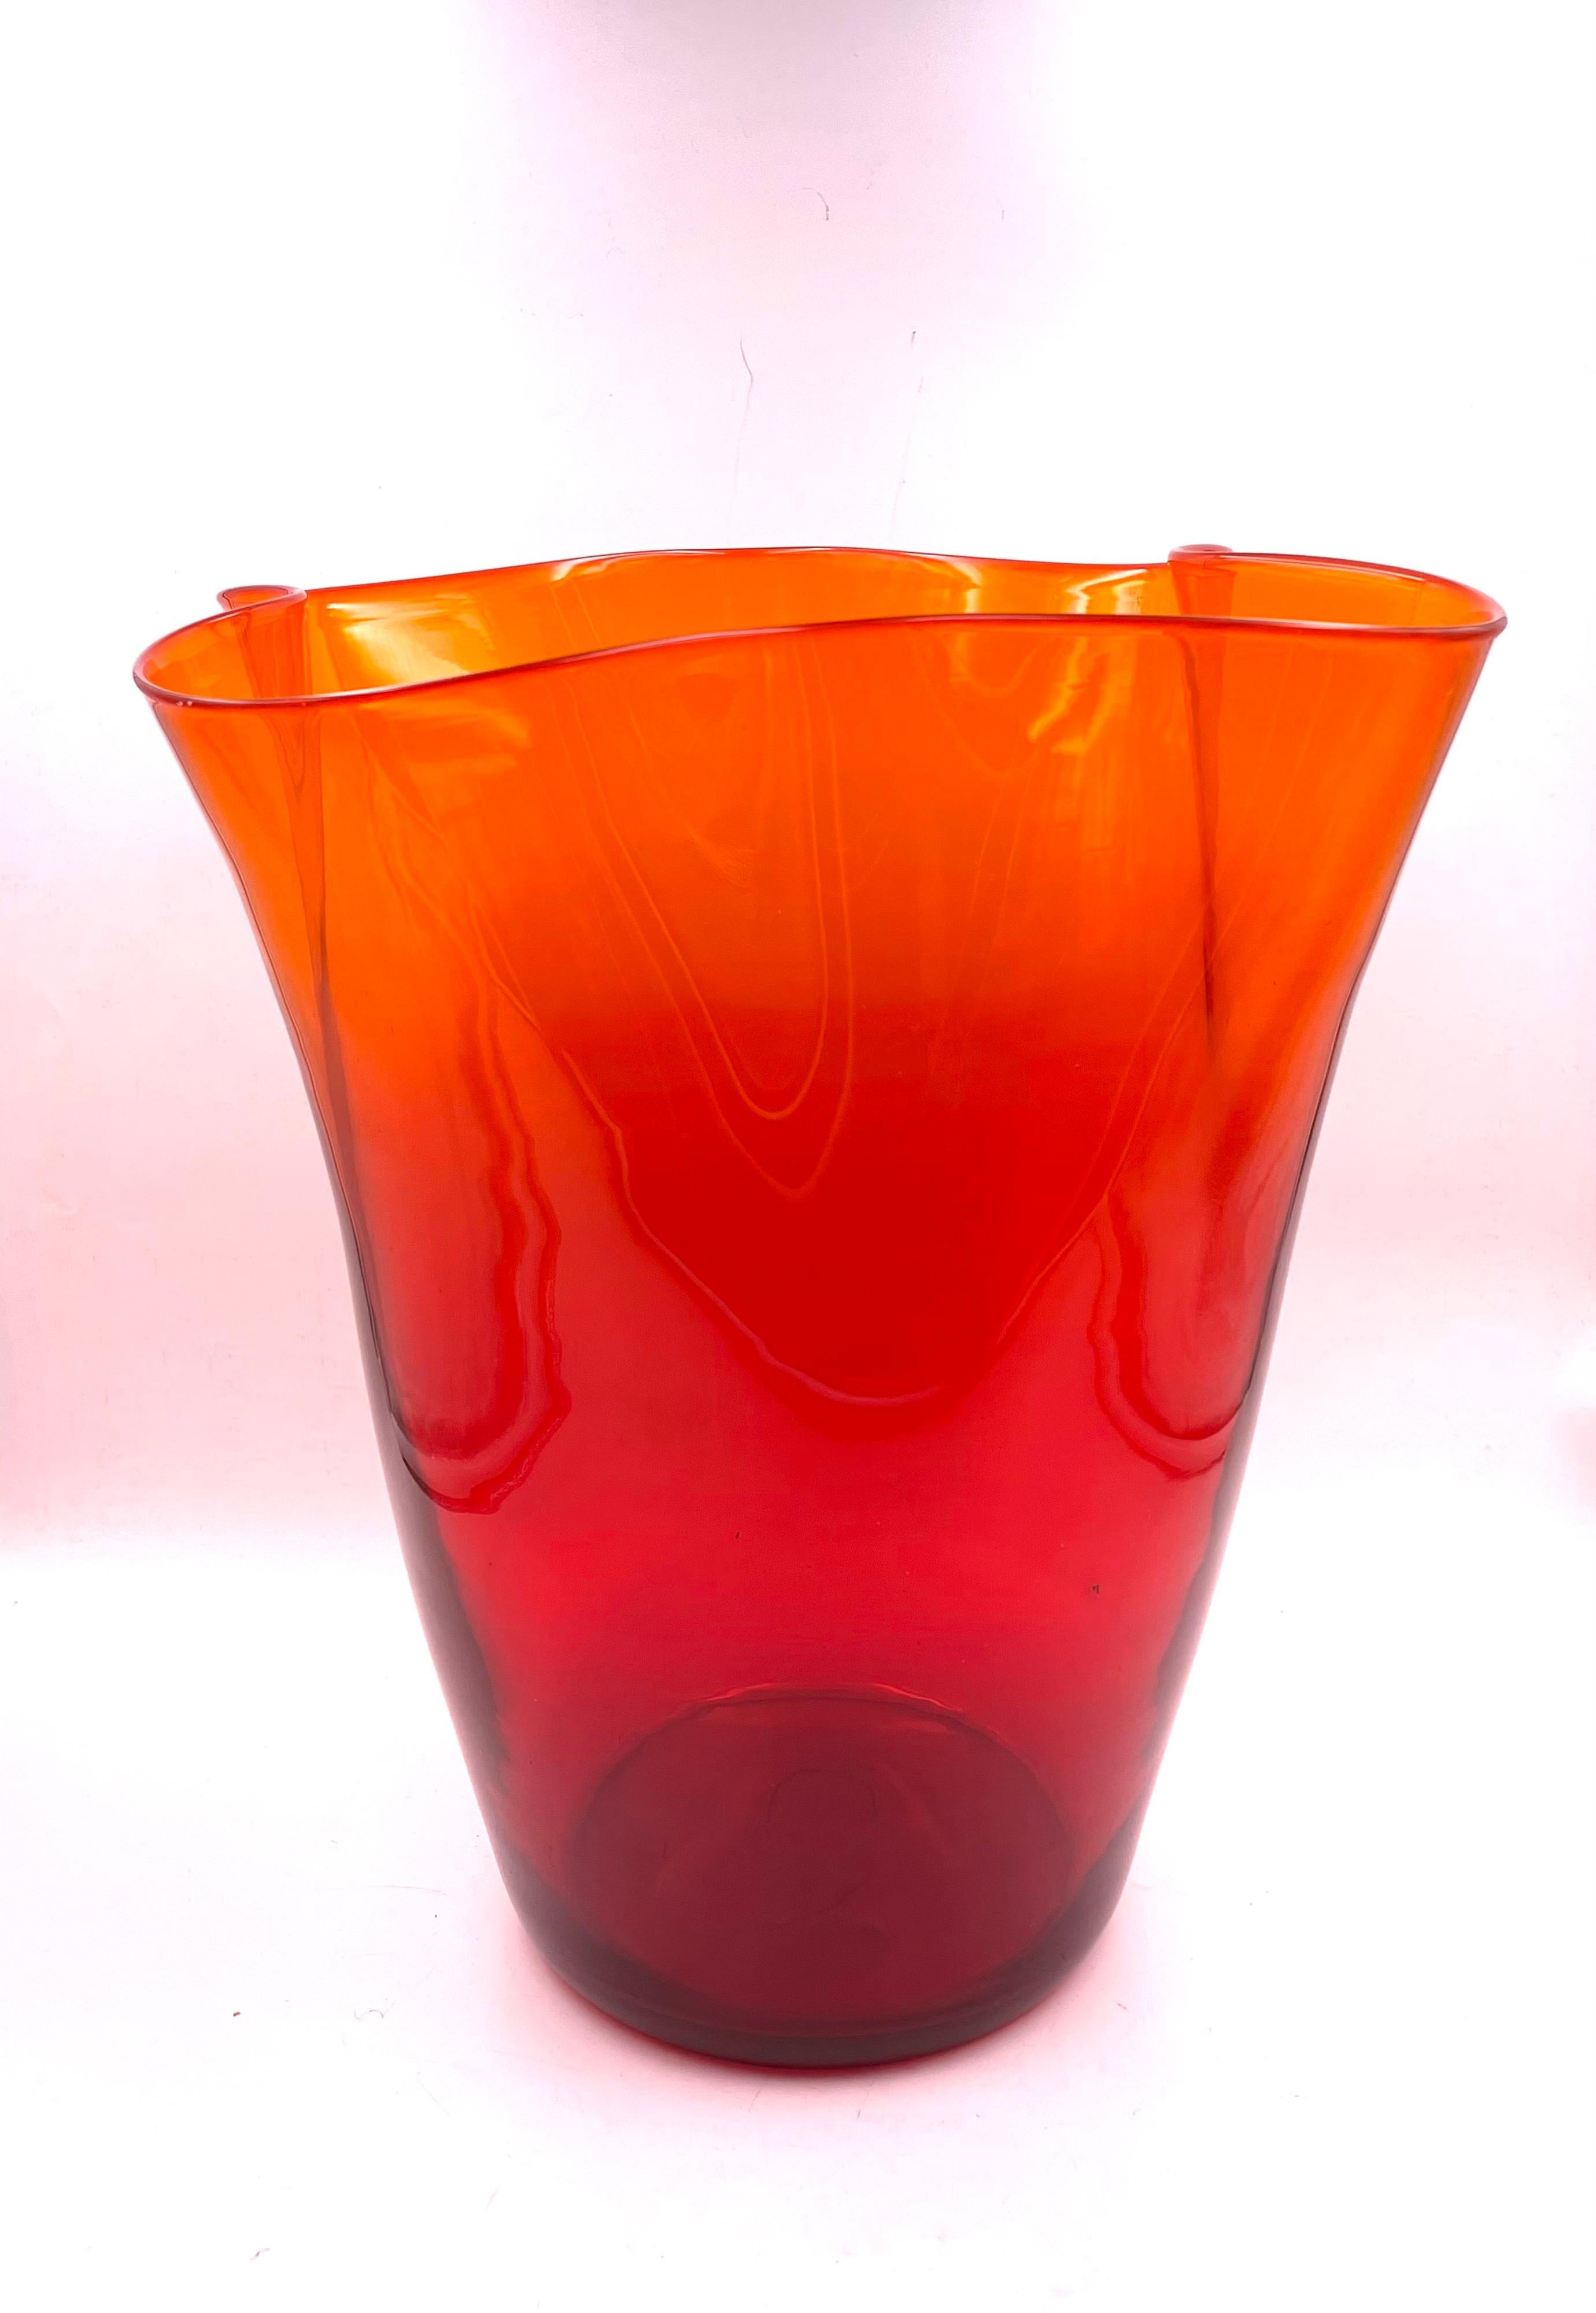 North American Tall Massive Collectible Amberina Glass Handkerchief Vase by Blenko